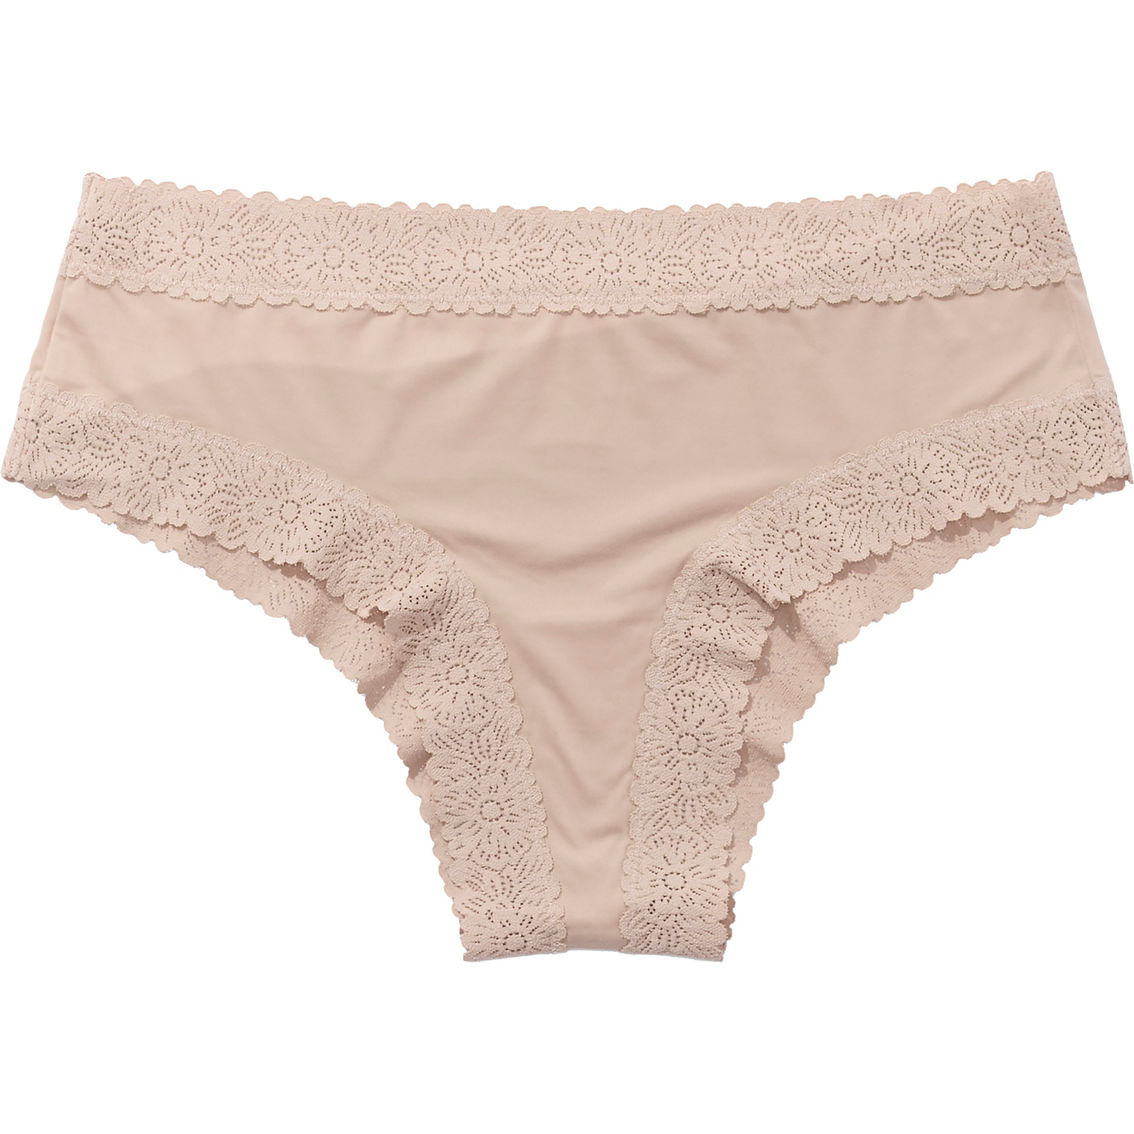 Aerie Sunnie Blossom Lace Cheeky Underwear, Panties